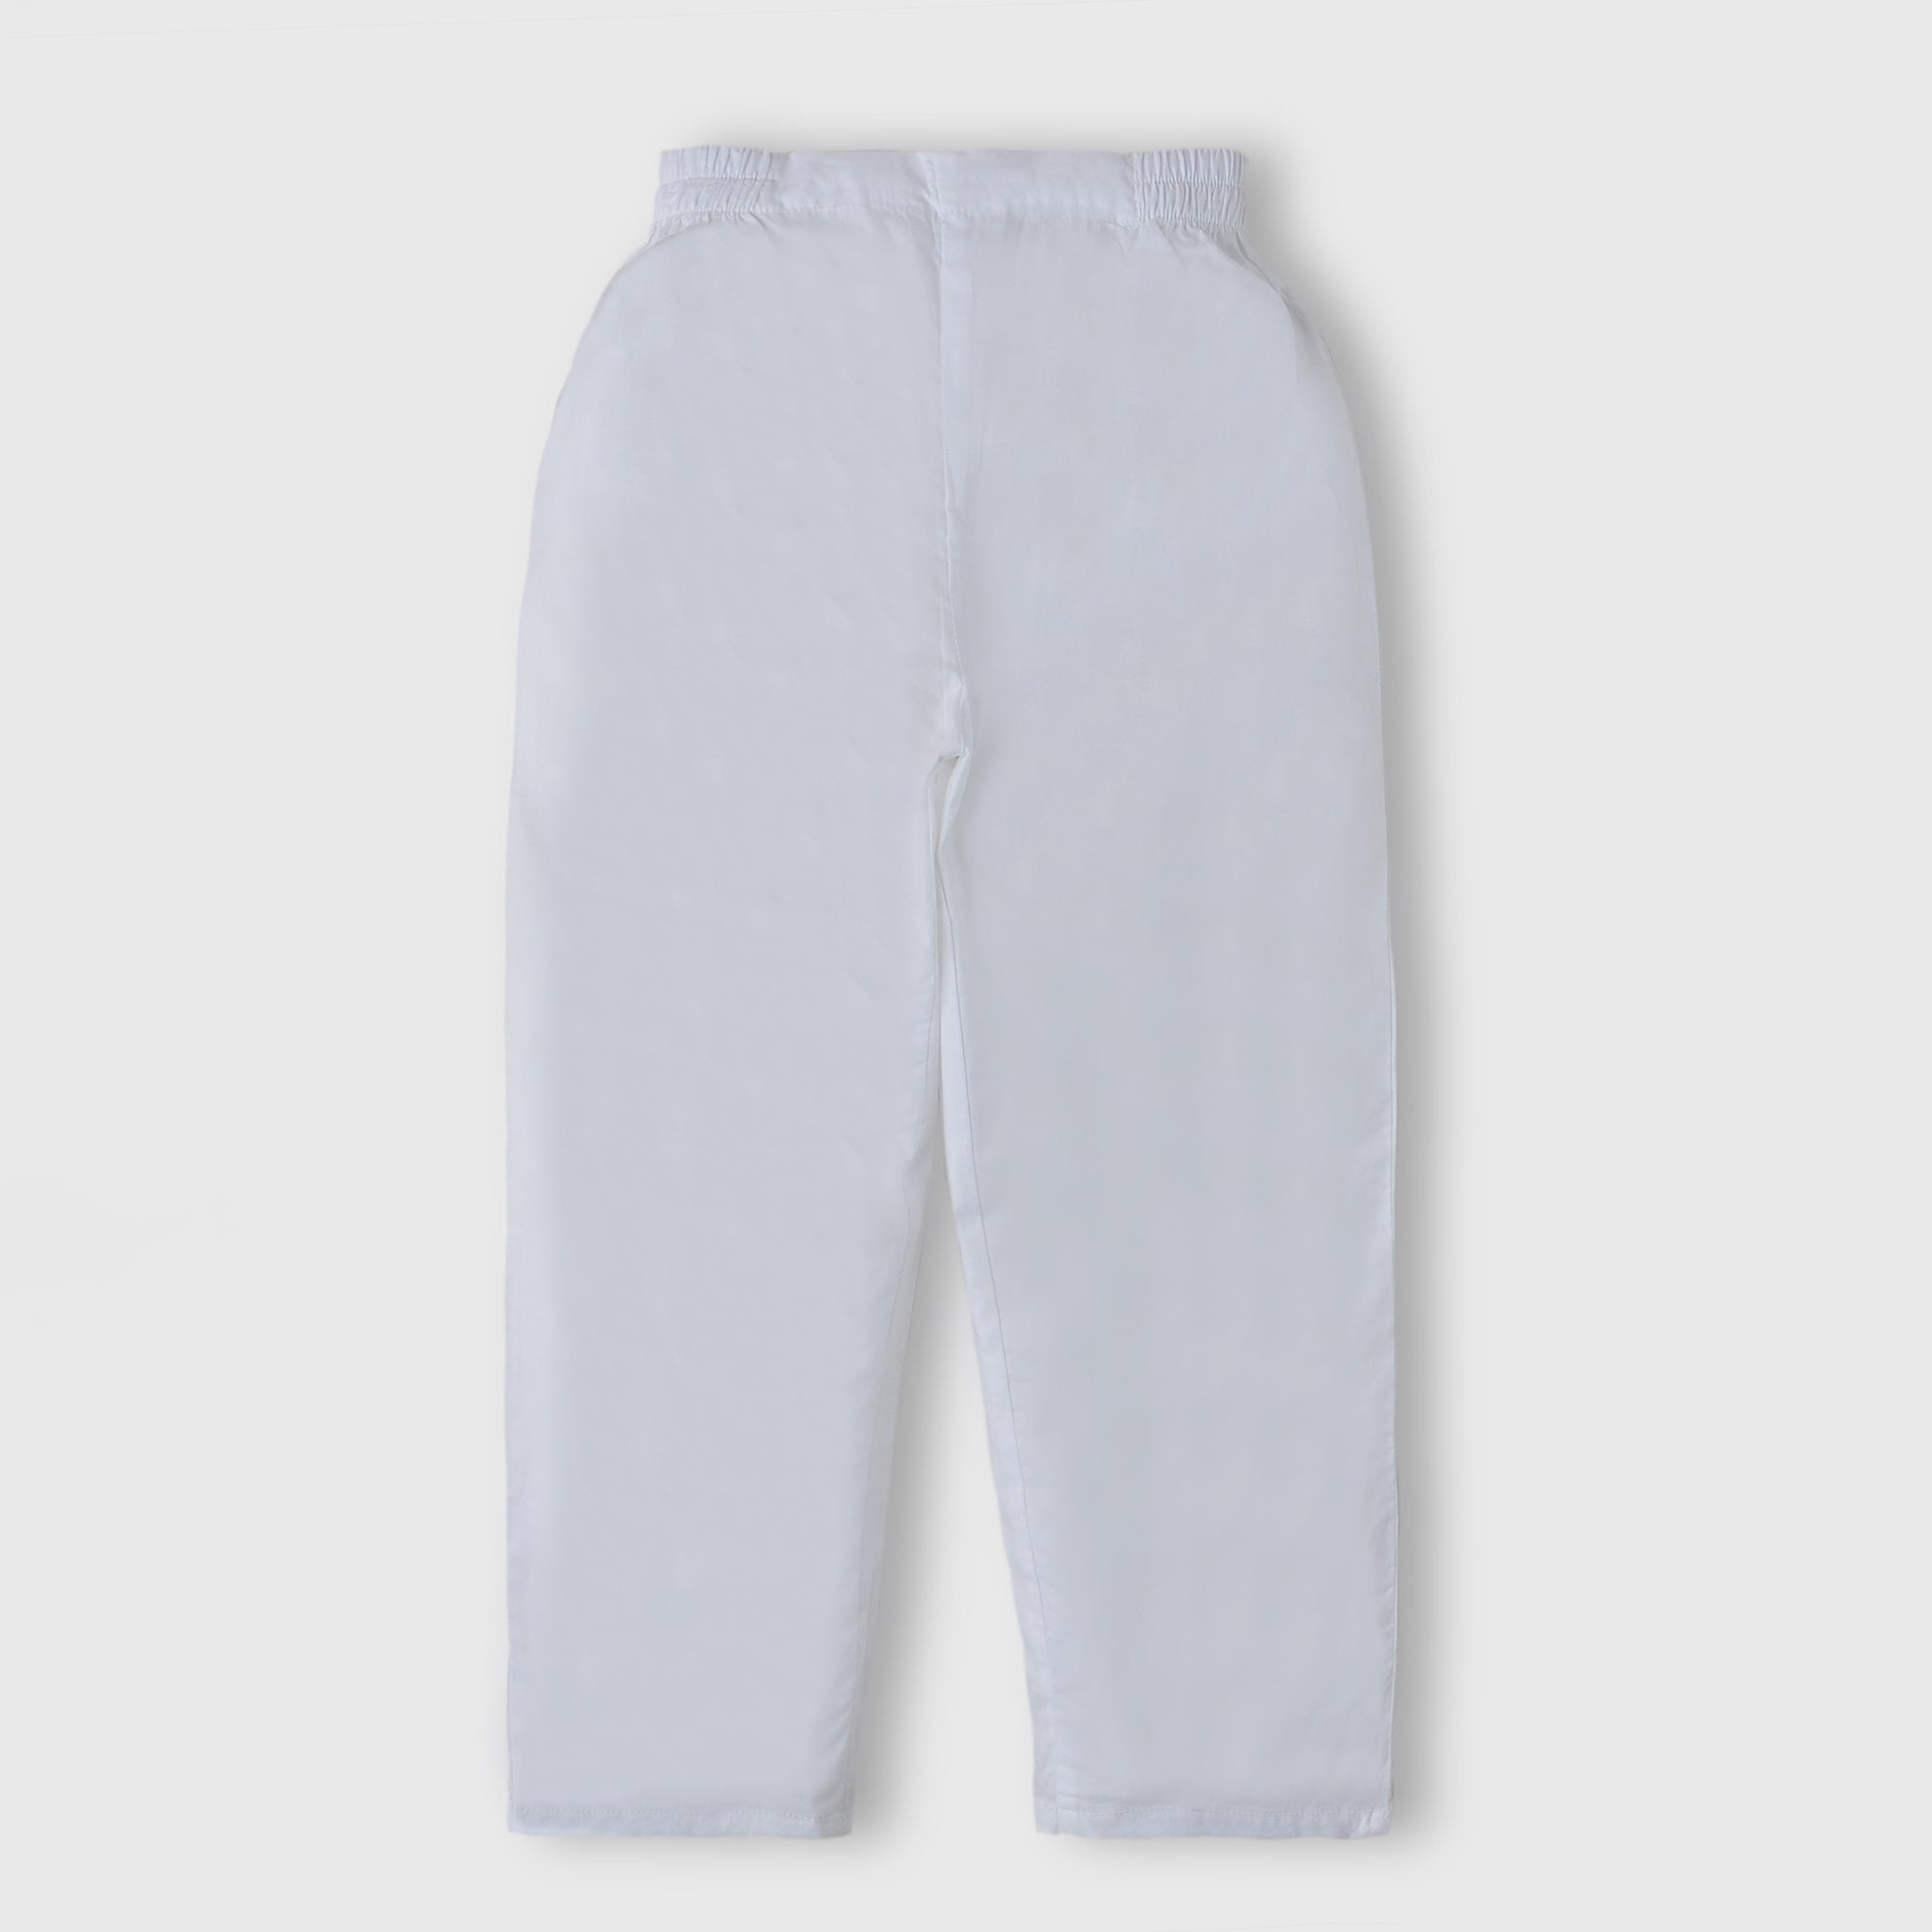 Basic White Trousers